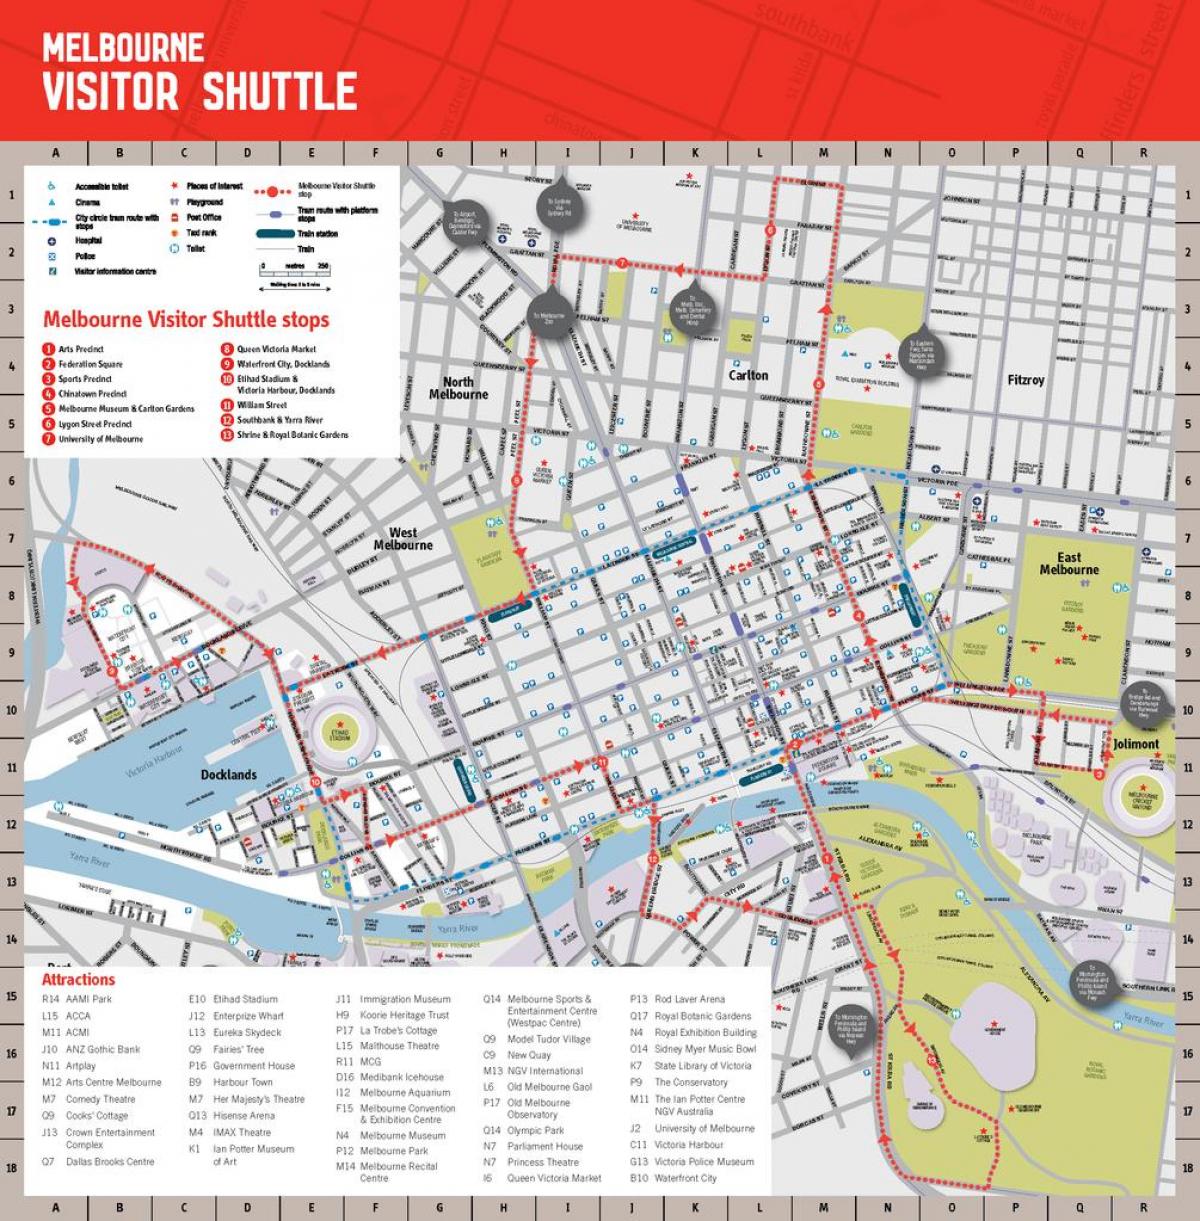 Melbourne stad toerisme-aantreklikhede kaart